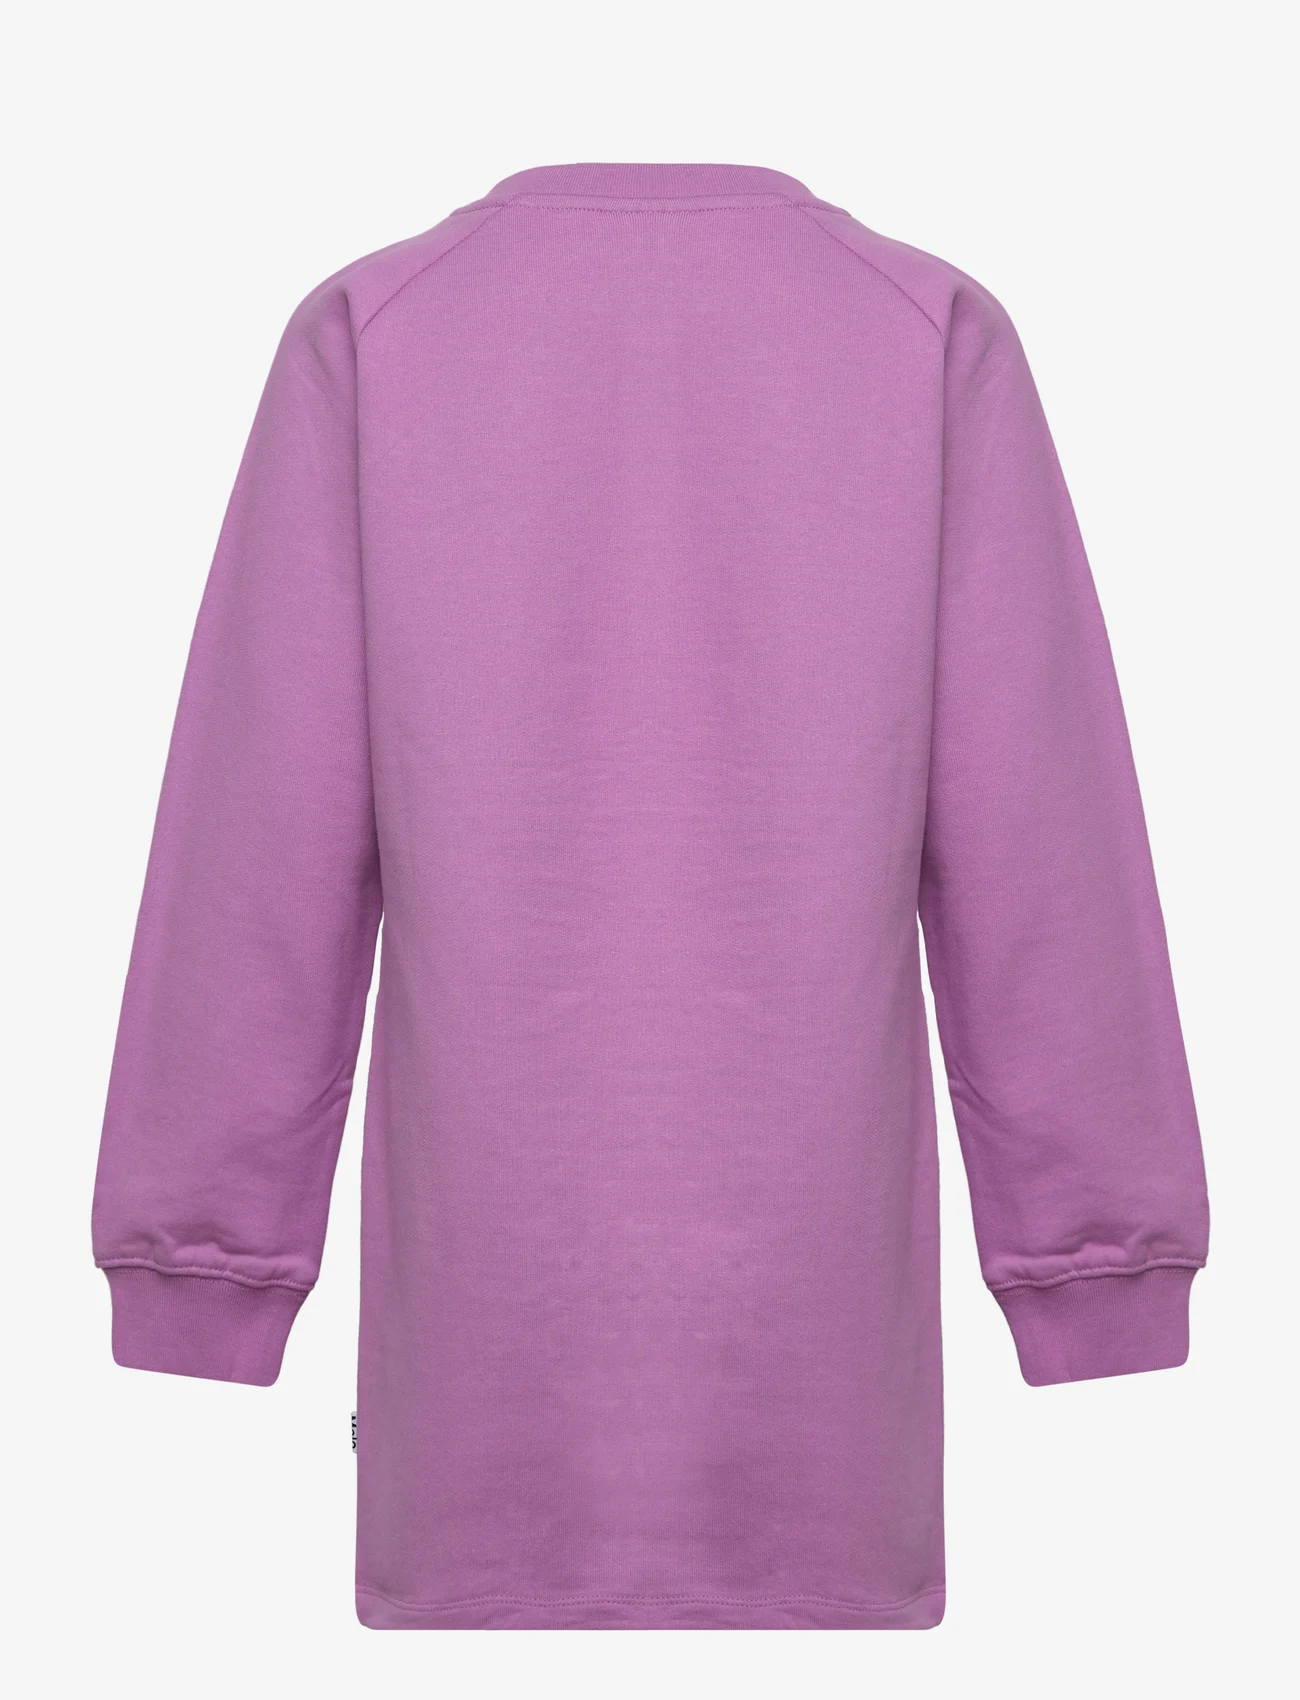 Molo - Carola - long-sleeved casual dresses - purple ray - 1